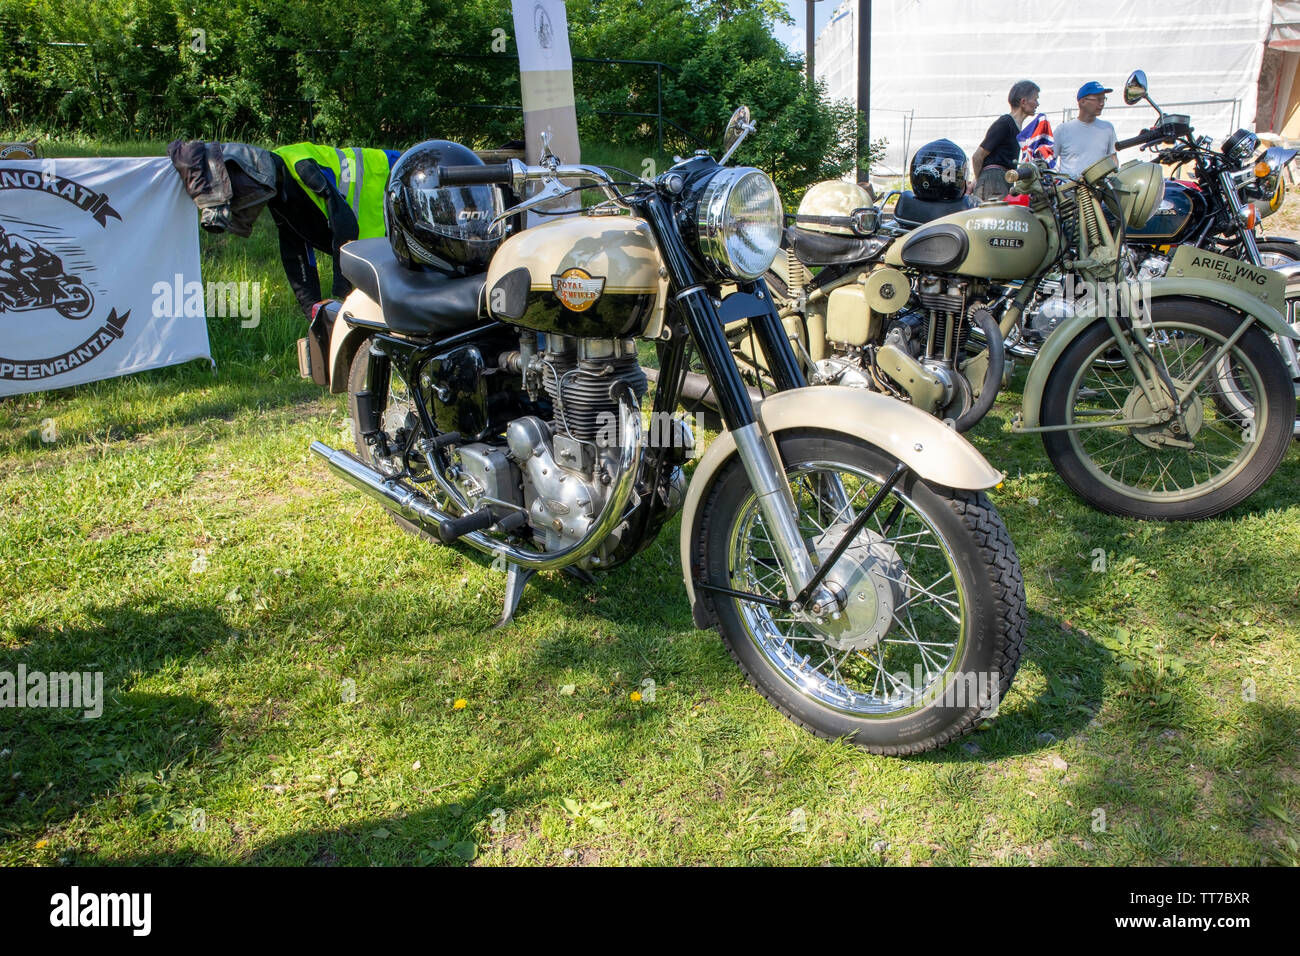 old motorcycles on display, Lappeenranta Finland Stock Photo